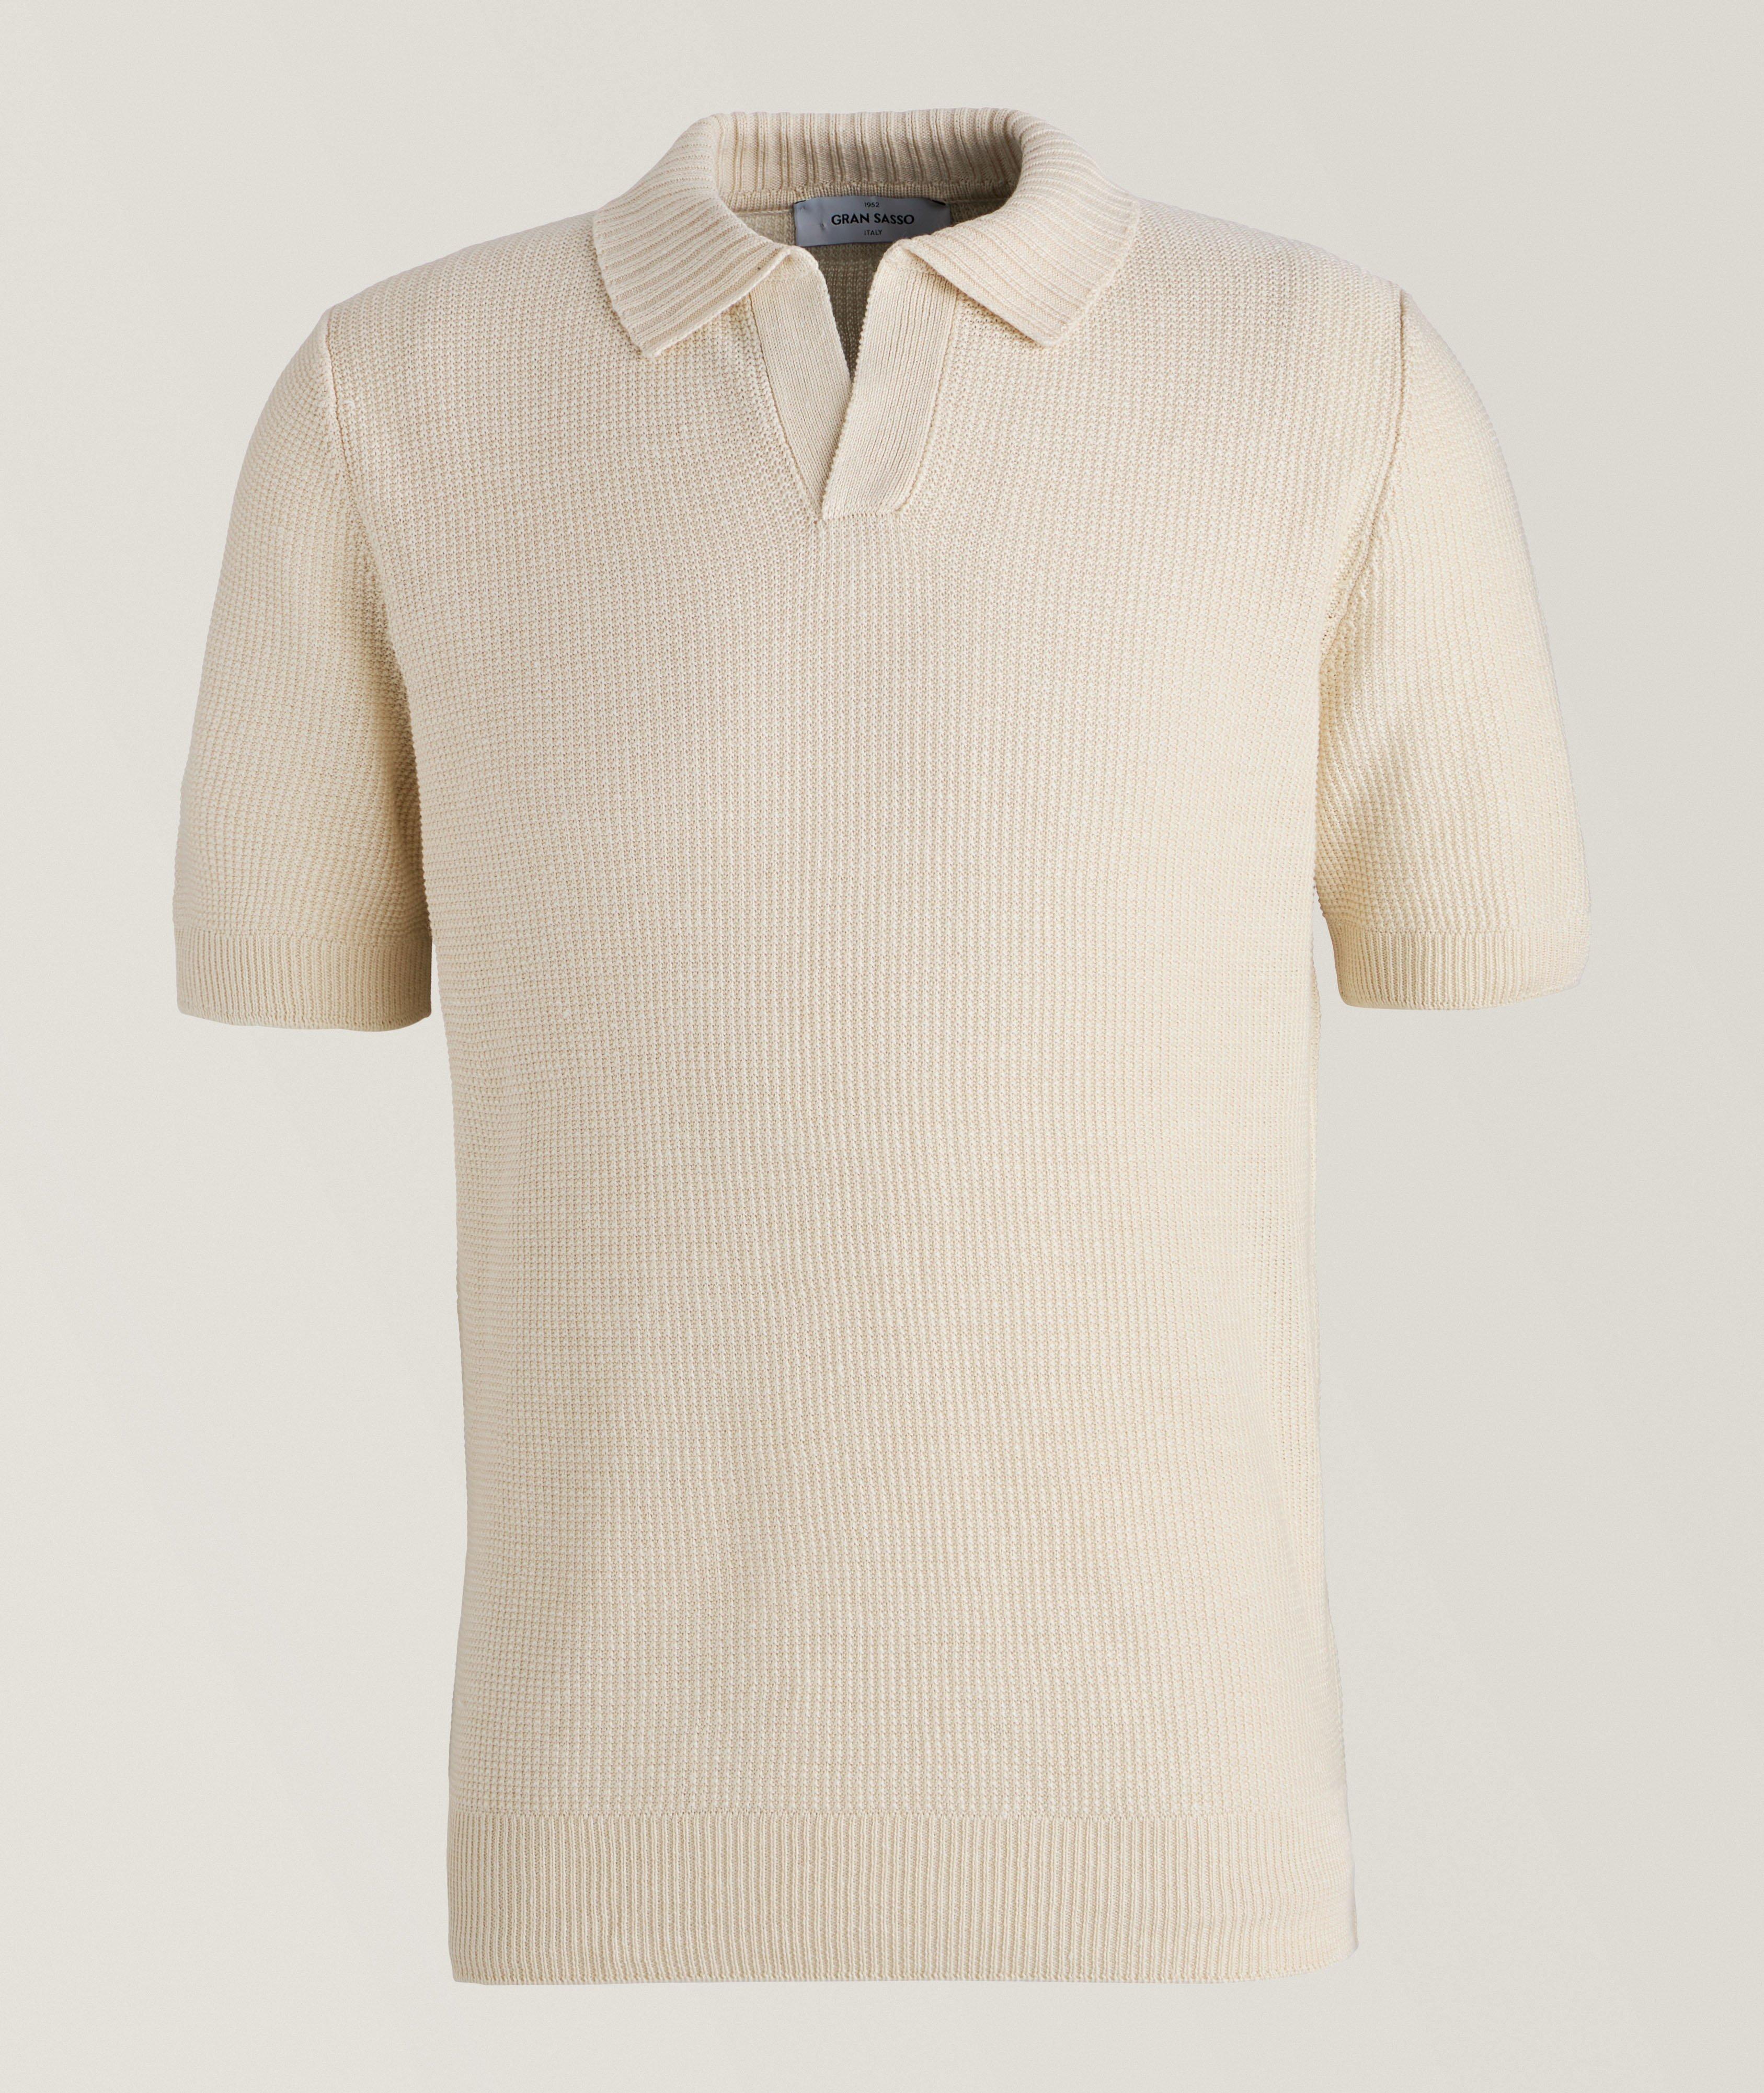 Herringbone Knit Linen-Cotton Polo image 0